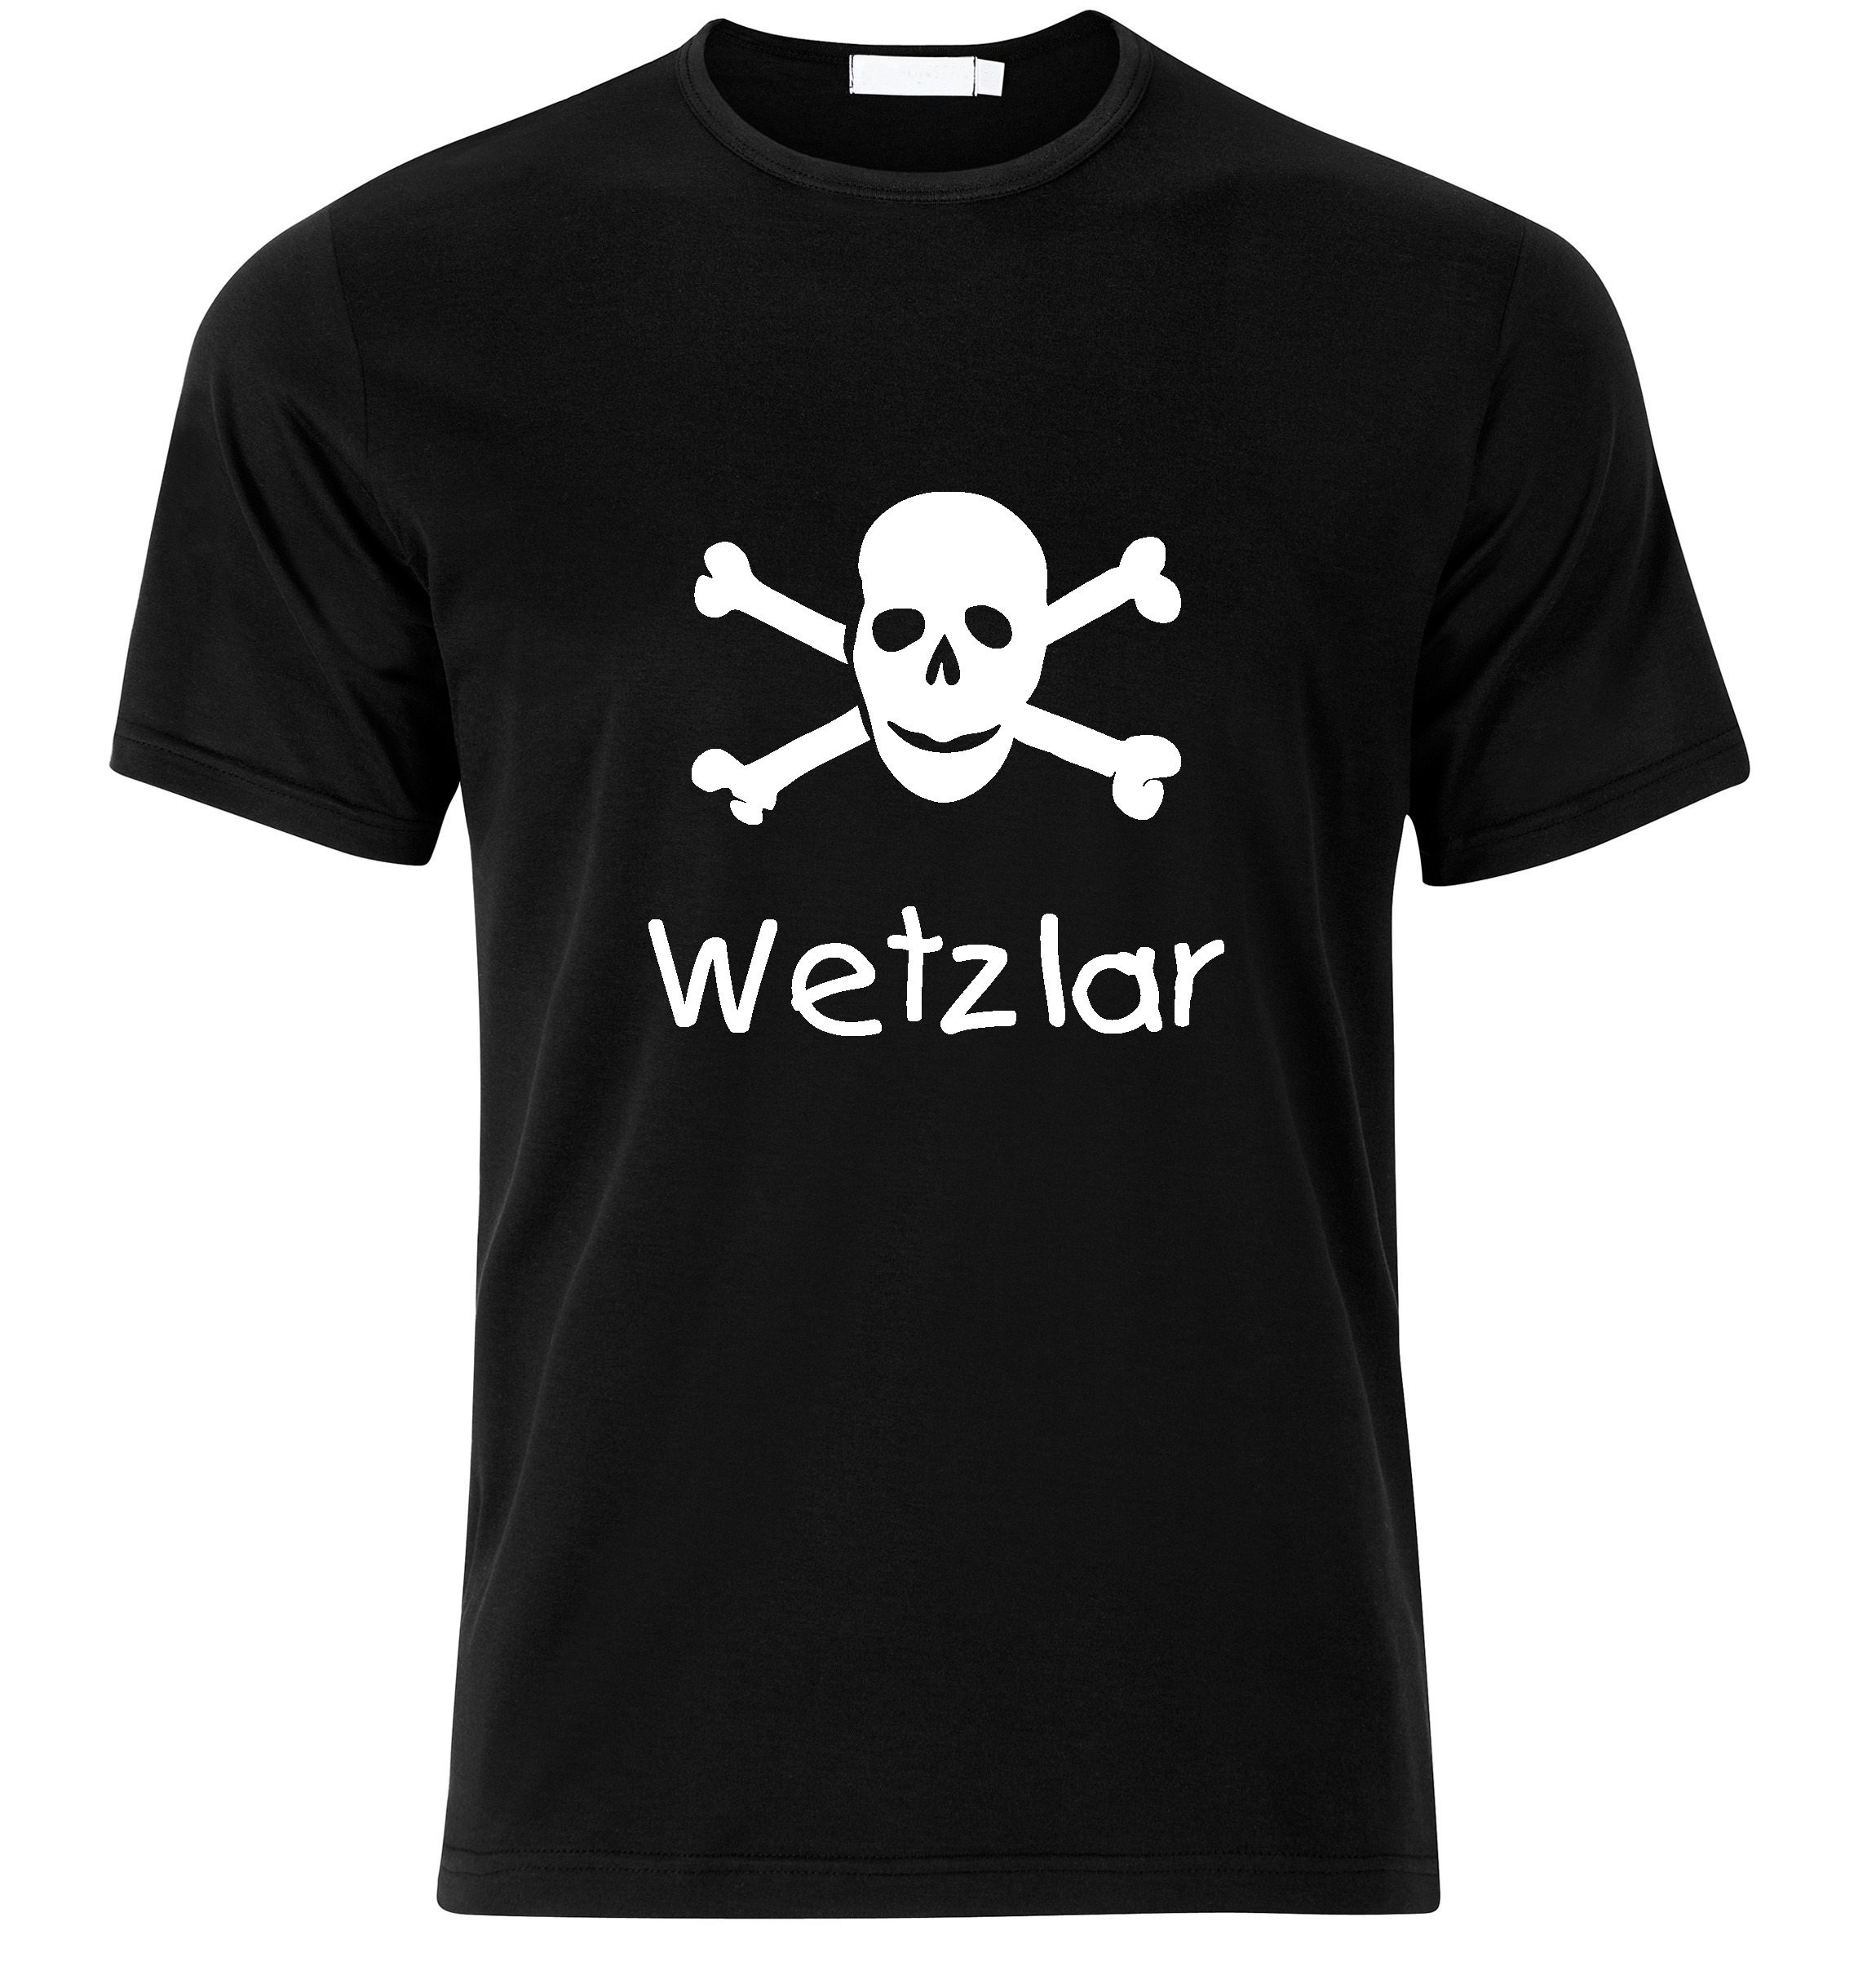 T-Shirt Wetzlar Jolly Roger, Totenkopf